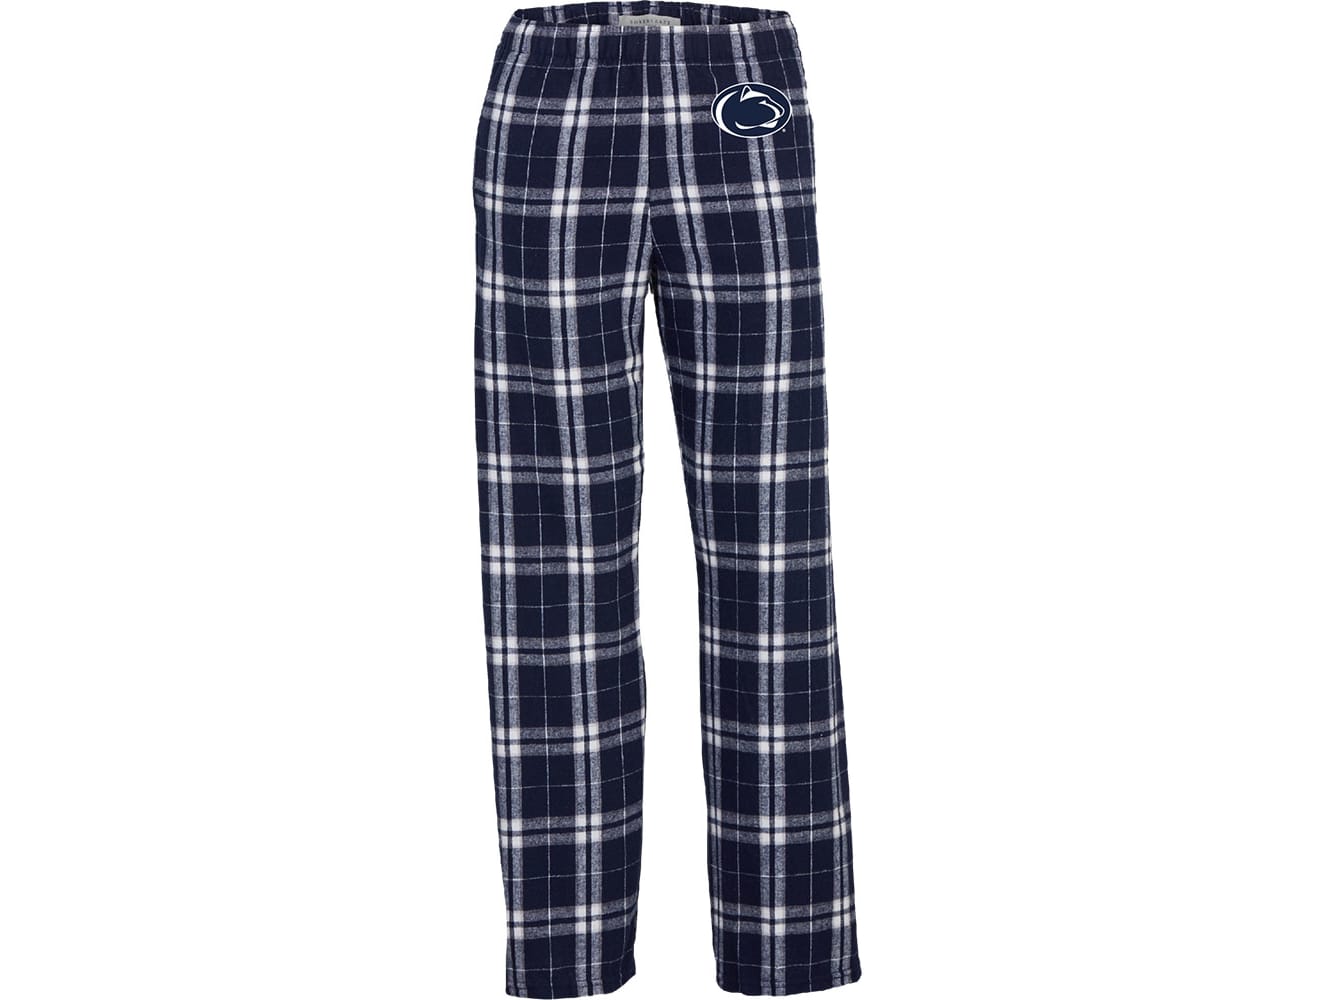 Penn State Men's Flannel Sleep Shorts